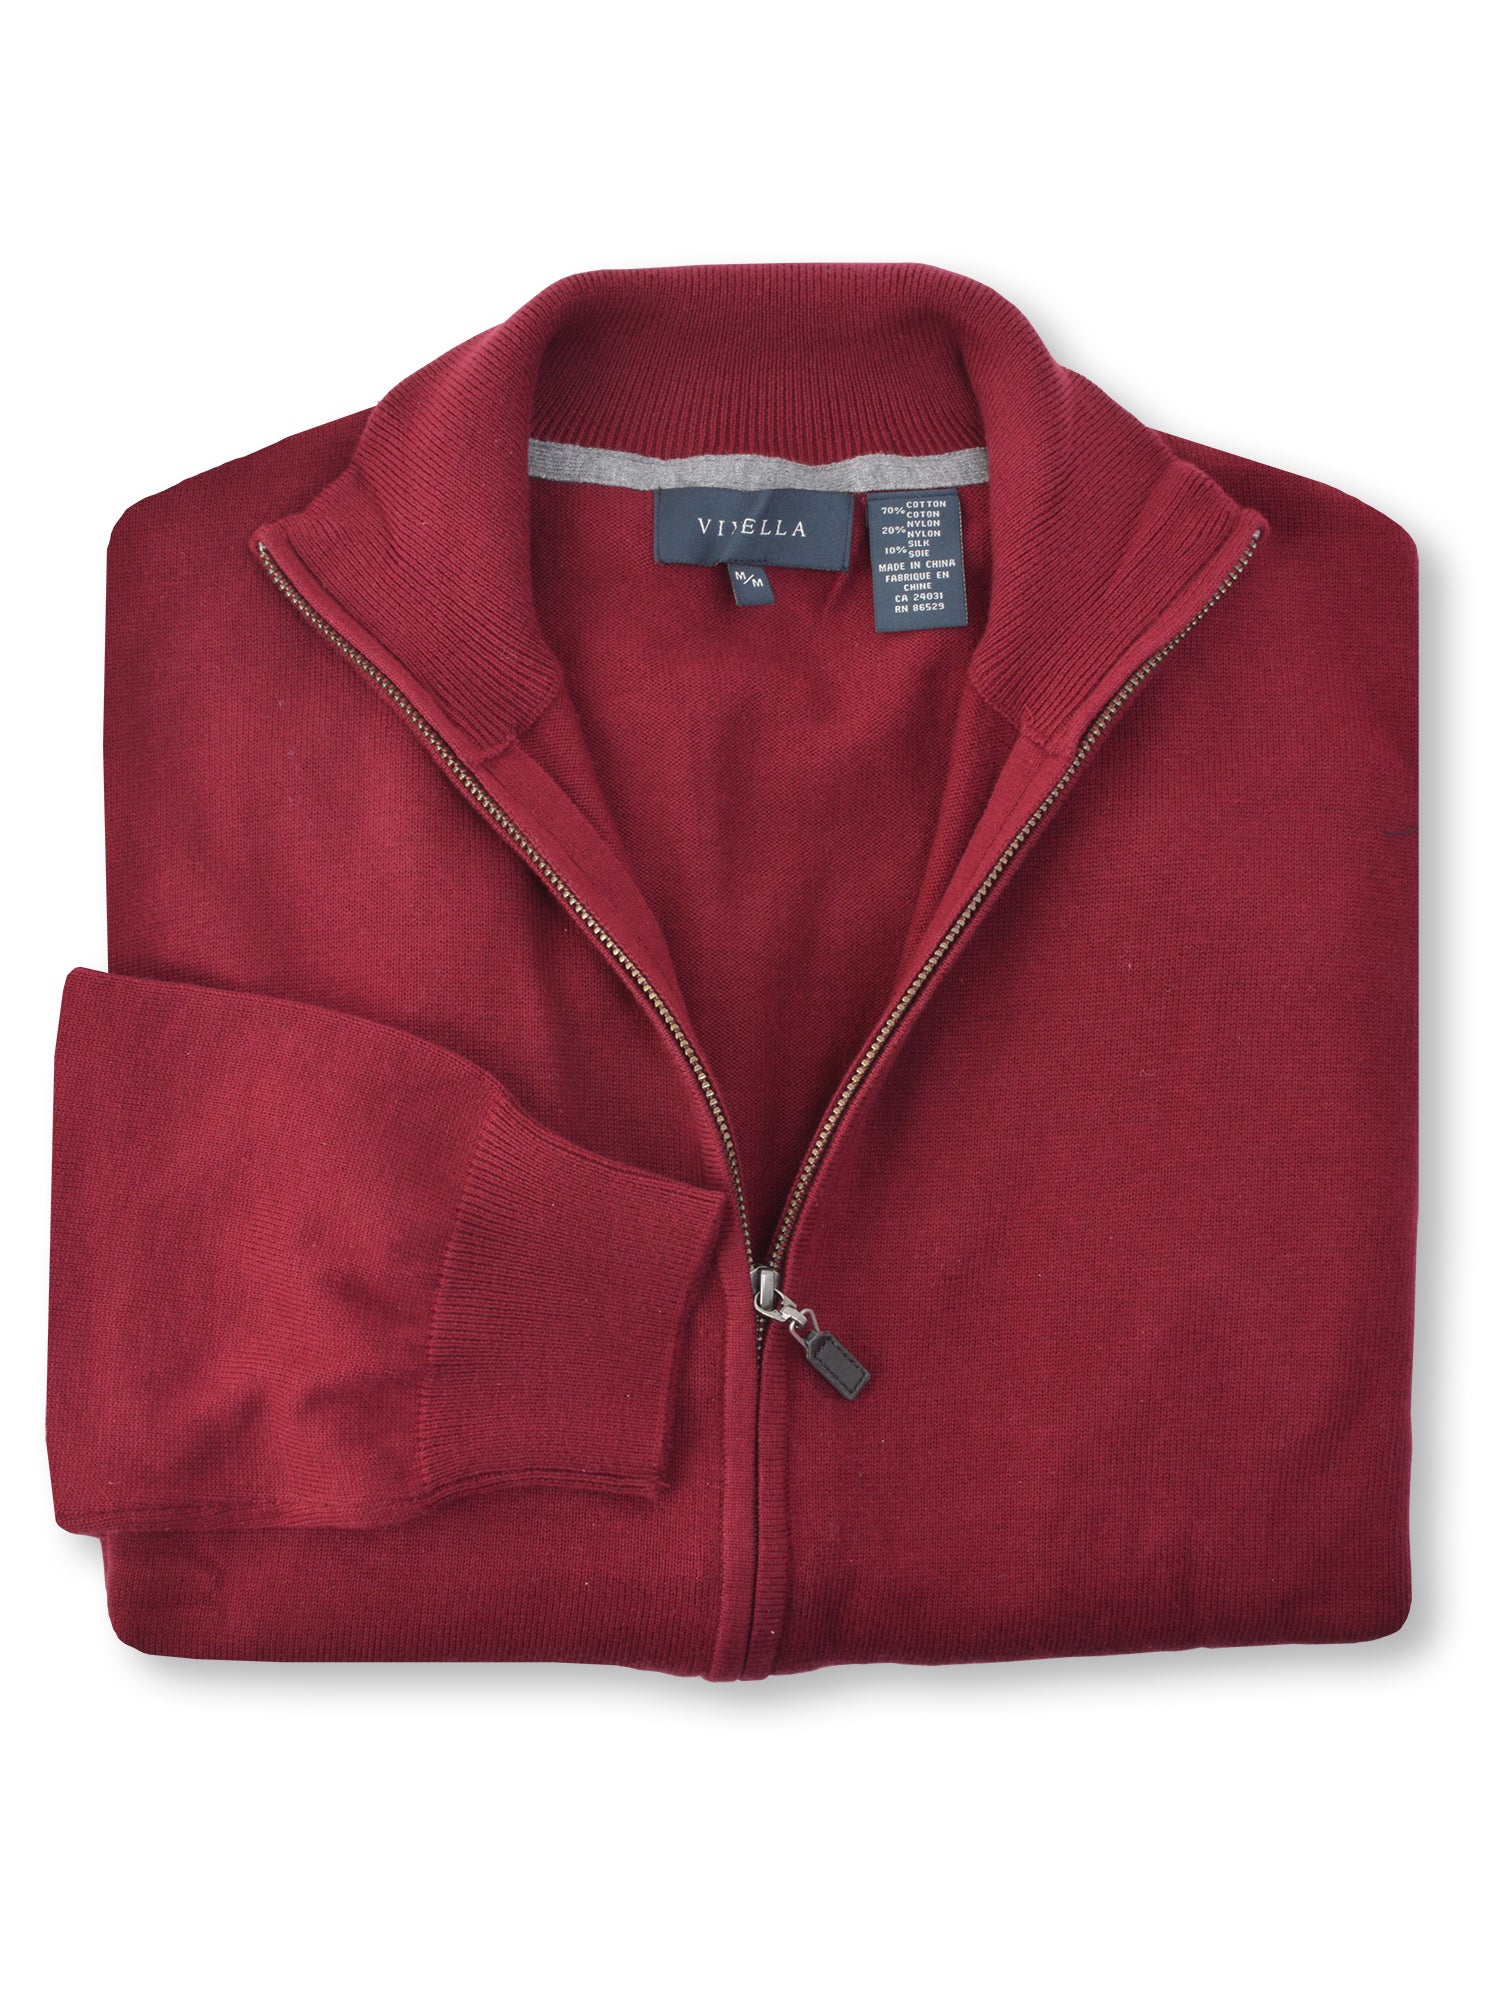 Viyella Silk Blend Full Zip Men's Sweaters in Burgundy - 357629-BUR